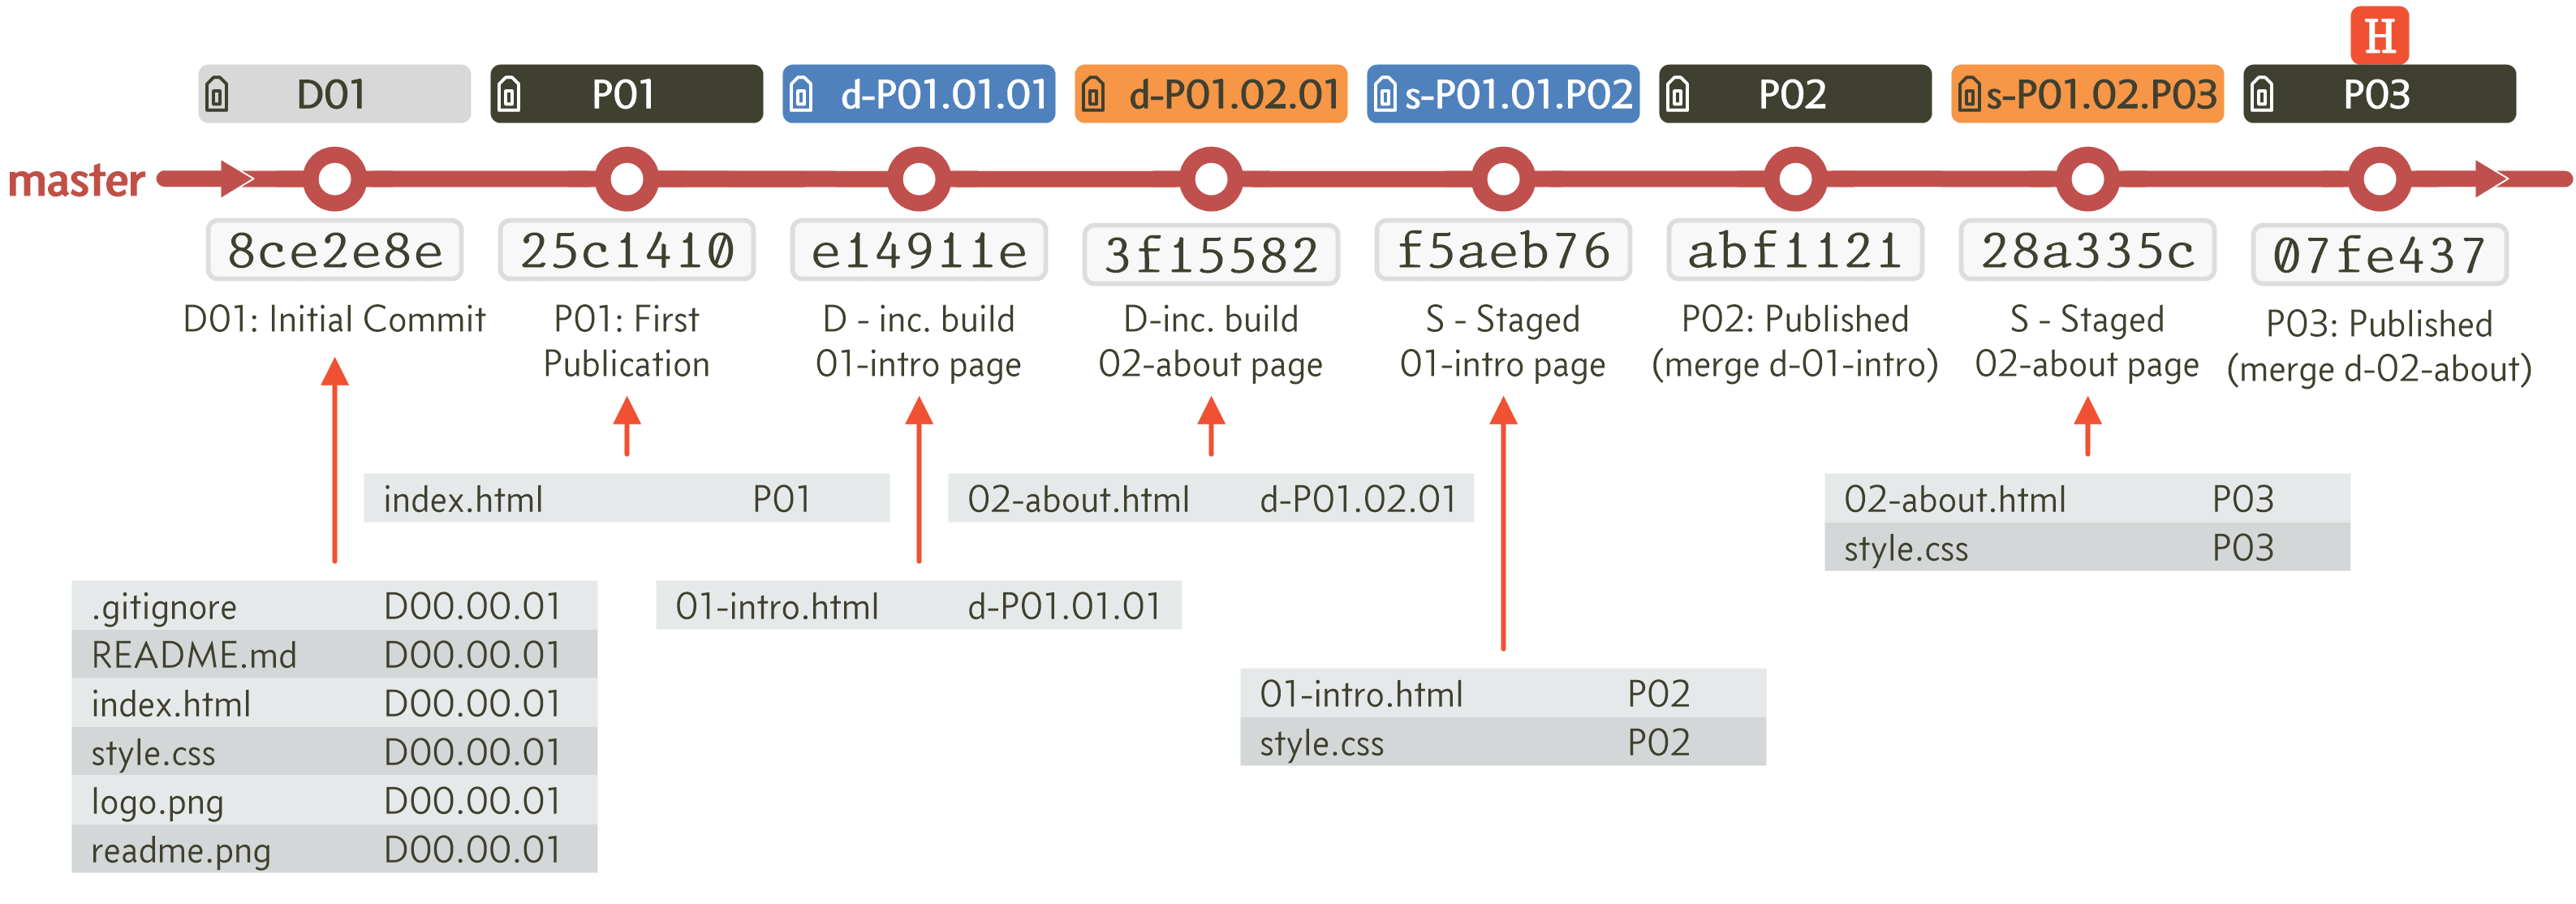 Figure 7.16 - Final arrangement, all merged back to master branch